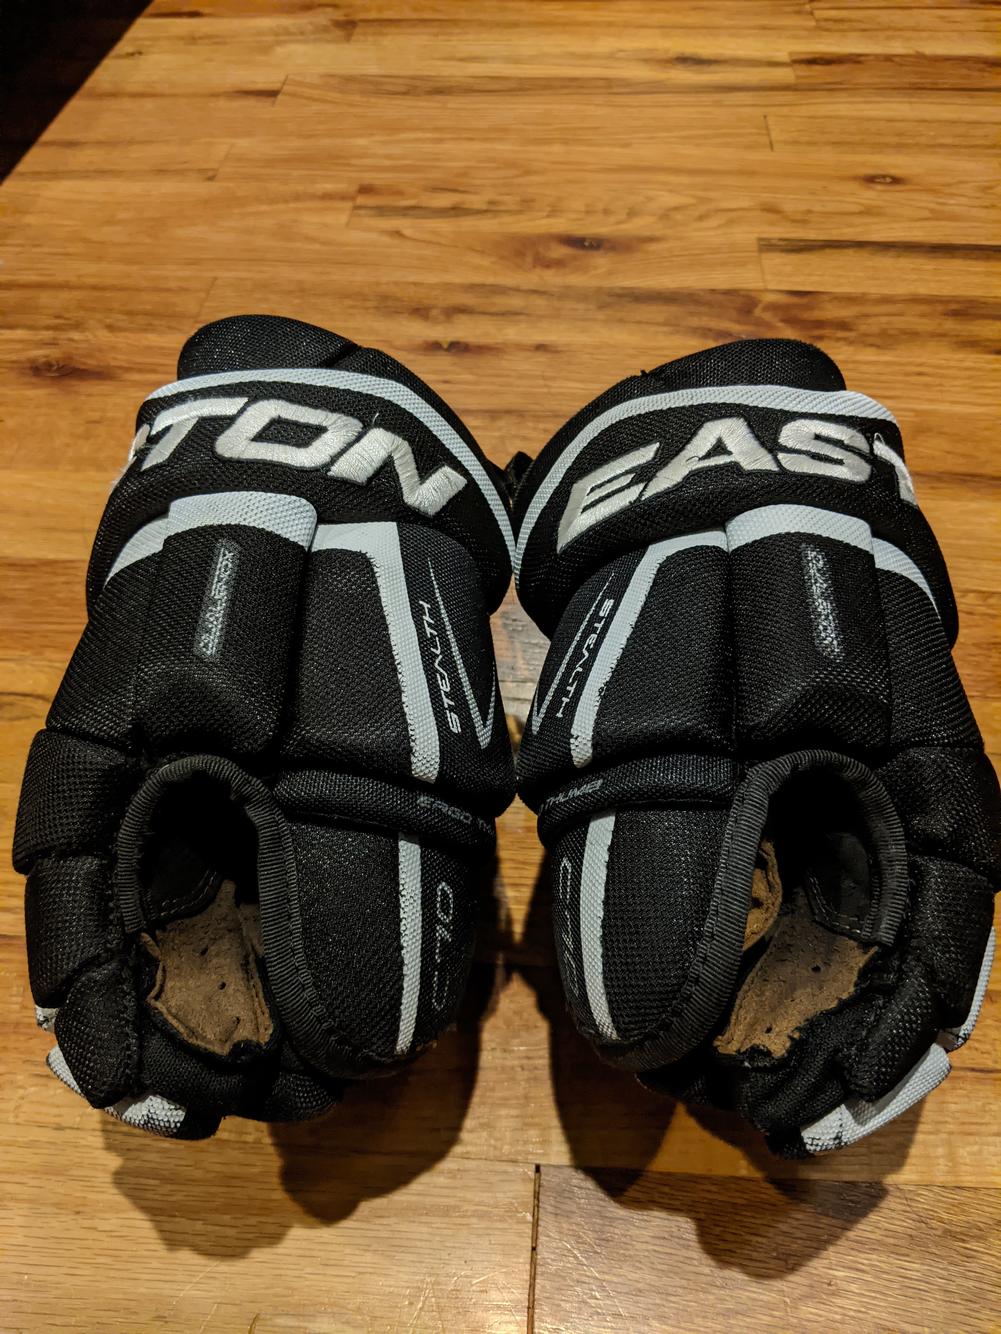 New Easton Stealth C7.0 Junior Hockey Gloves 12 Inch MSRP $100 Black 